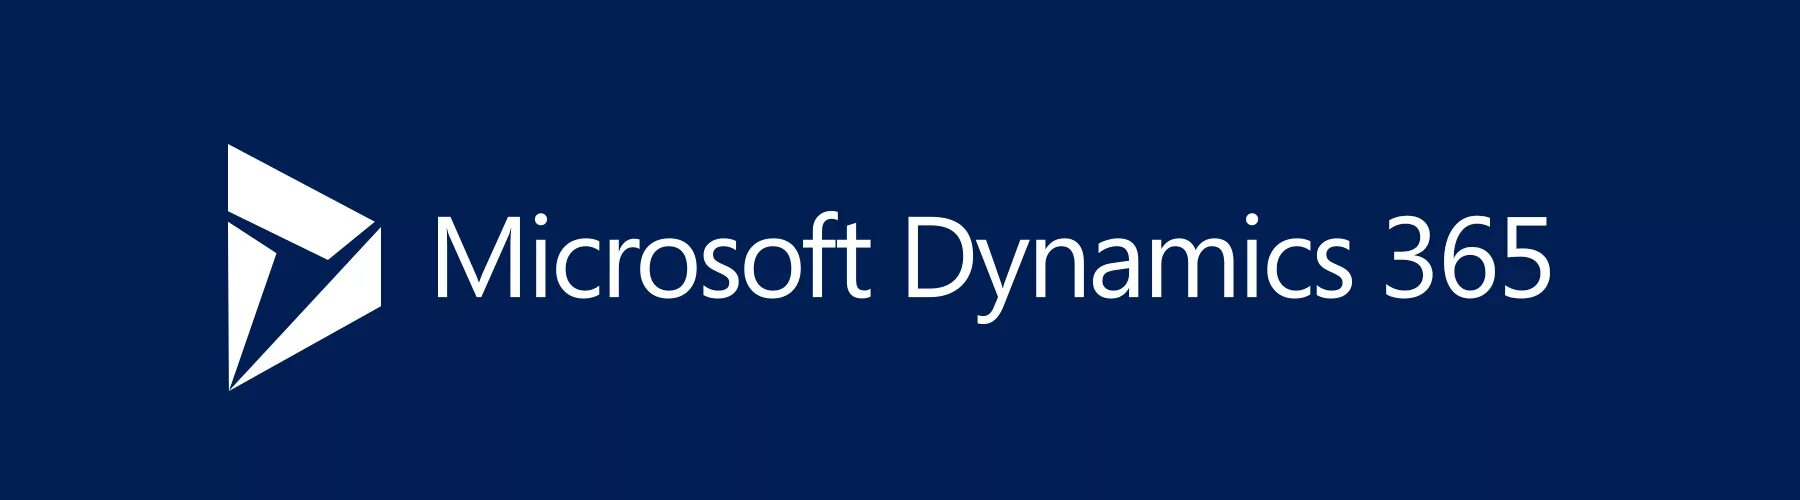 MS Dynamics 365. CRM Dynamics 365. Microsoft Dynamics 365. Microsoft Dynamics логотип.